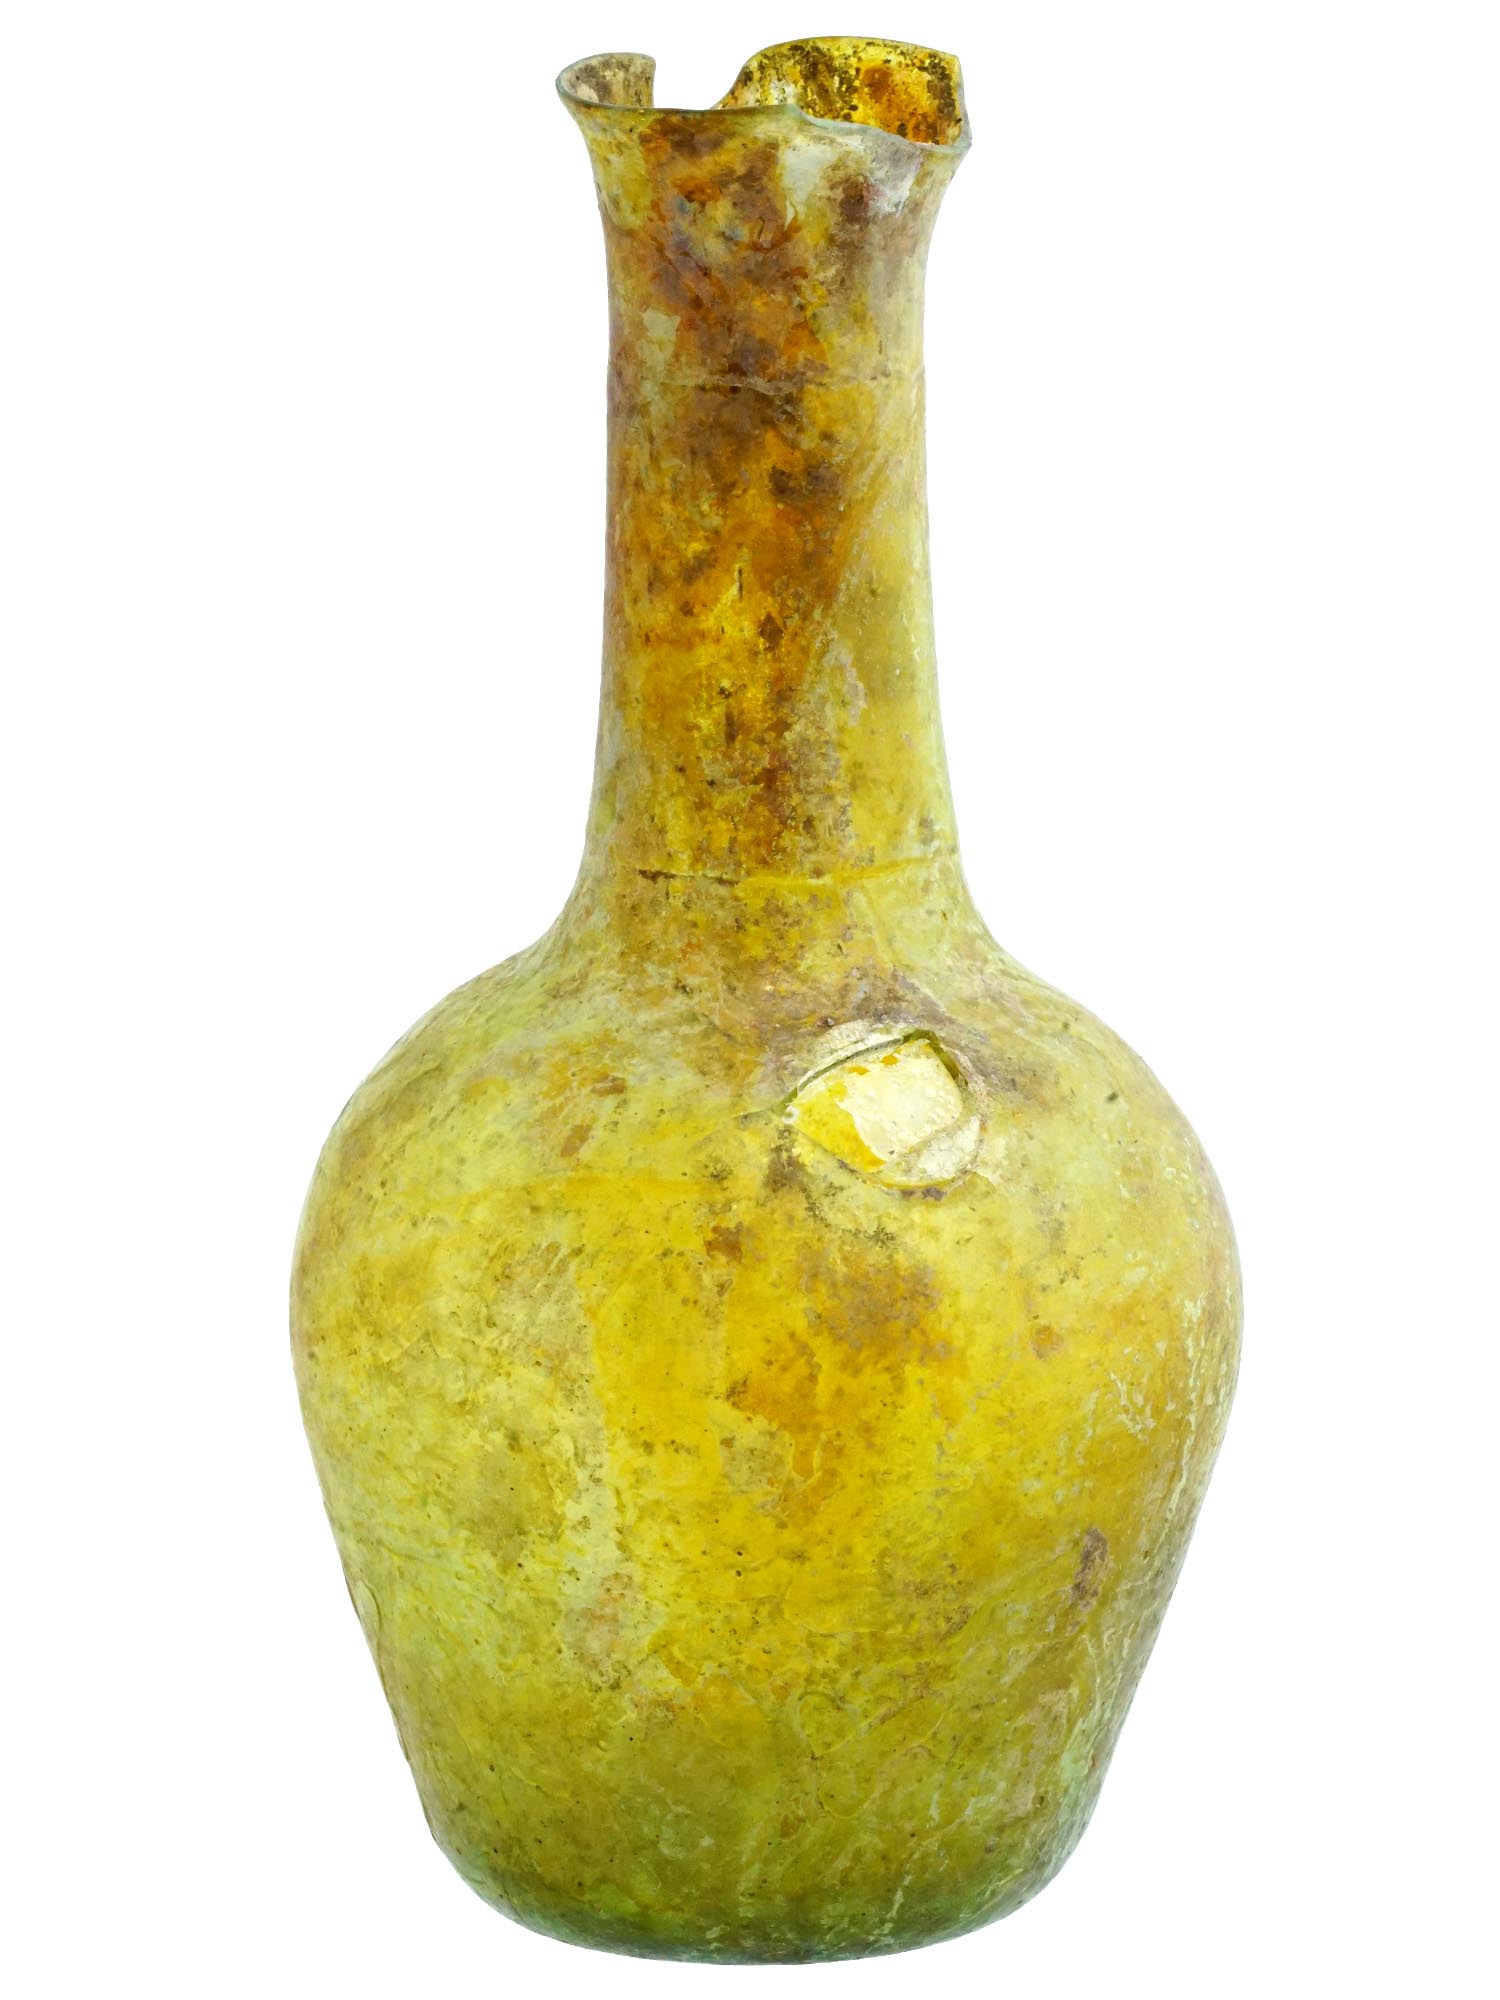 ANCIENT ROMAN GLASS PERFUME BOTTLE 1ST CENTURY BC PIC-1